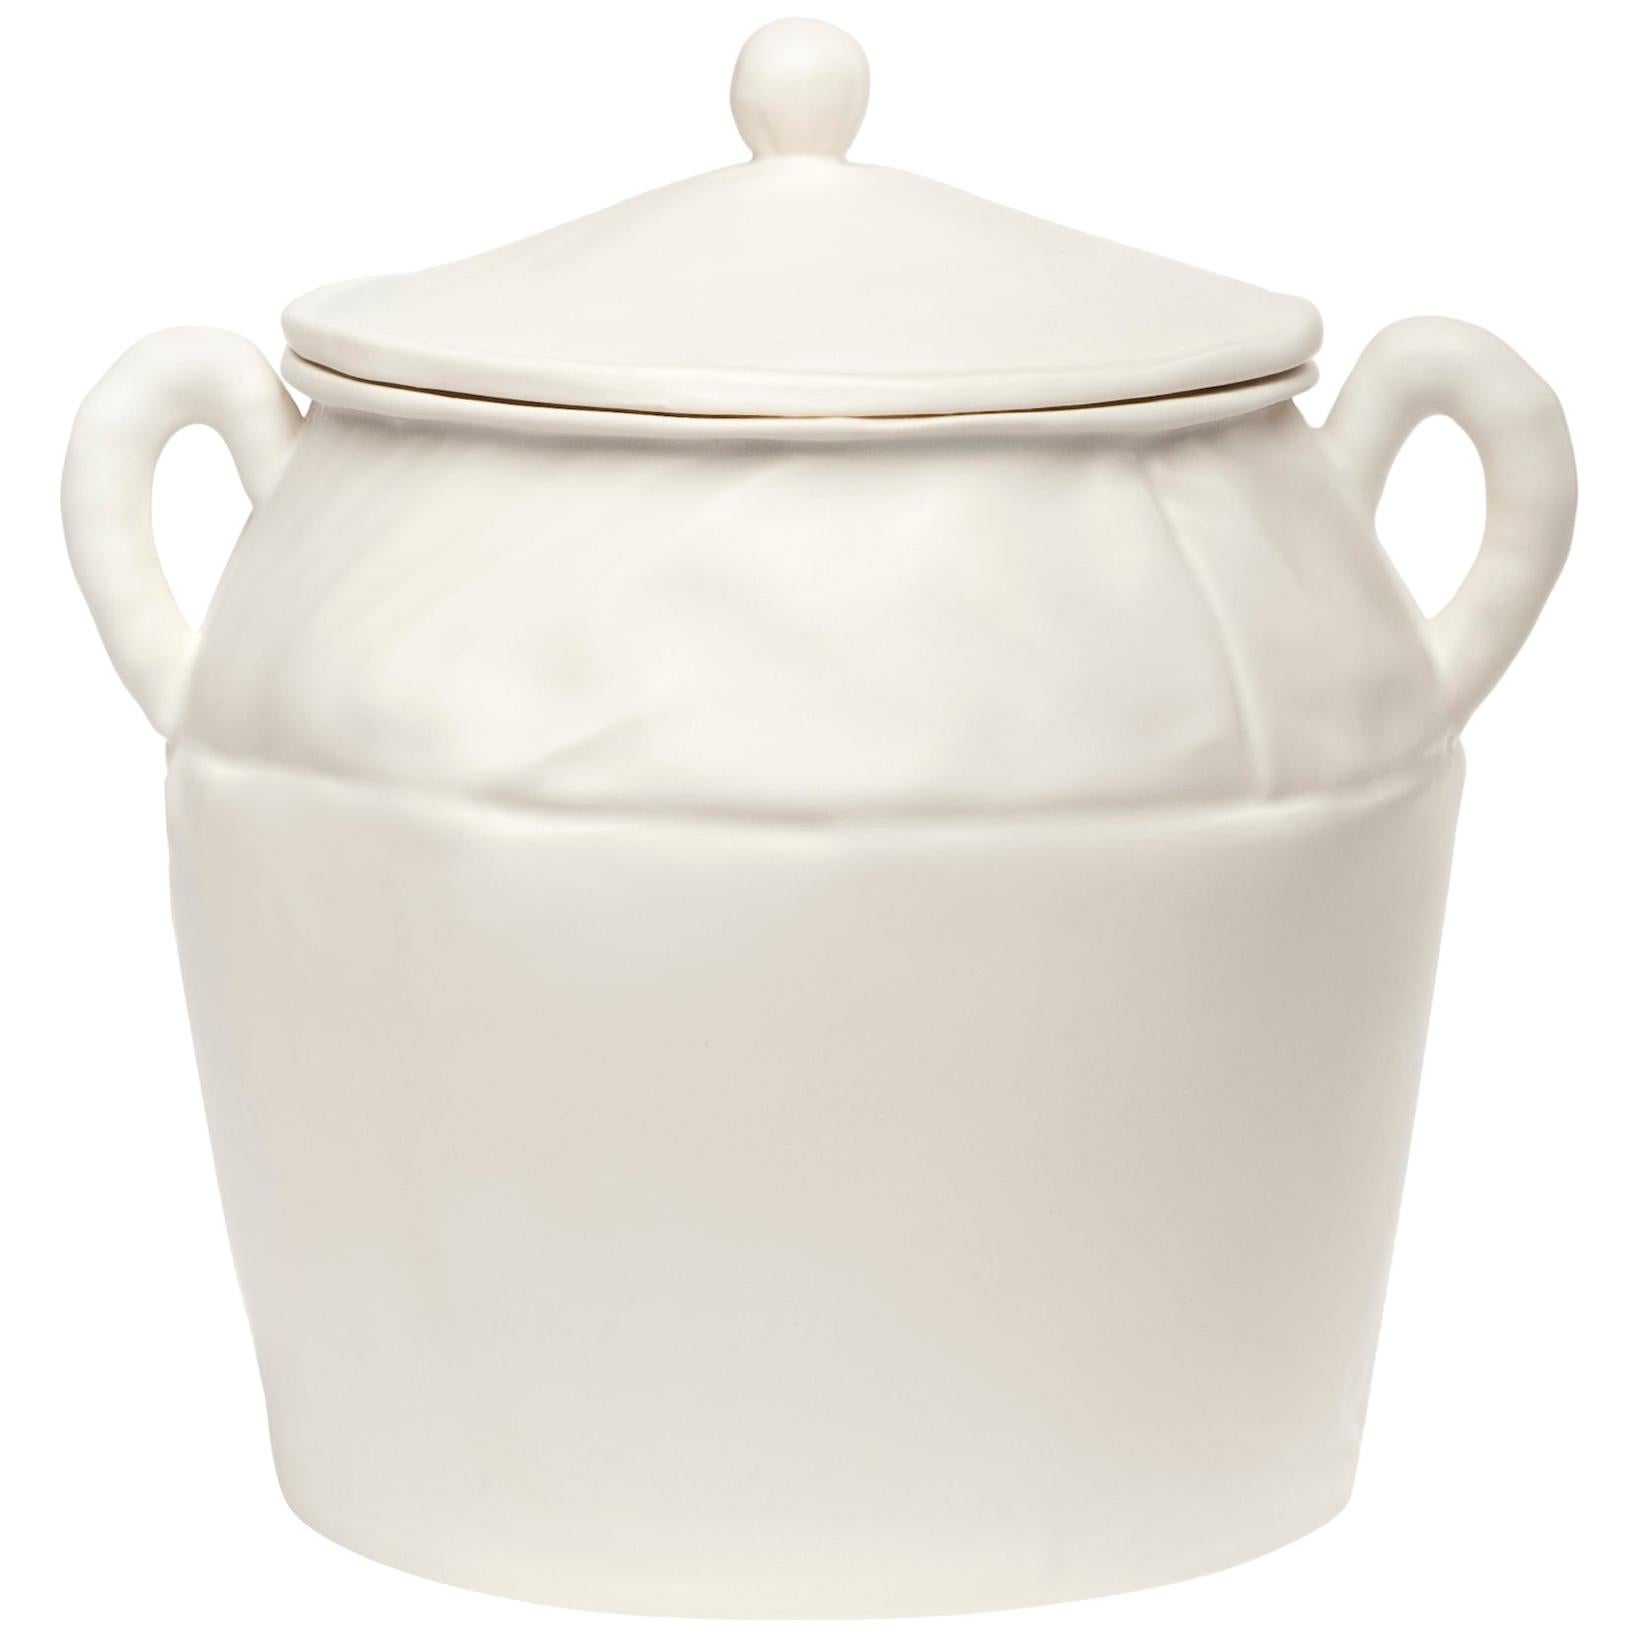 Soft Pot, White Ceramics For Sale